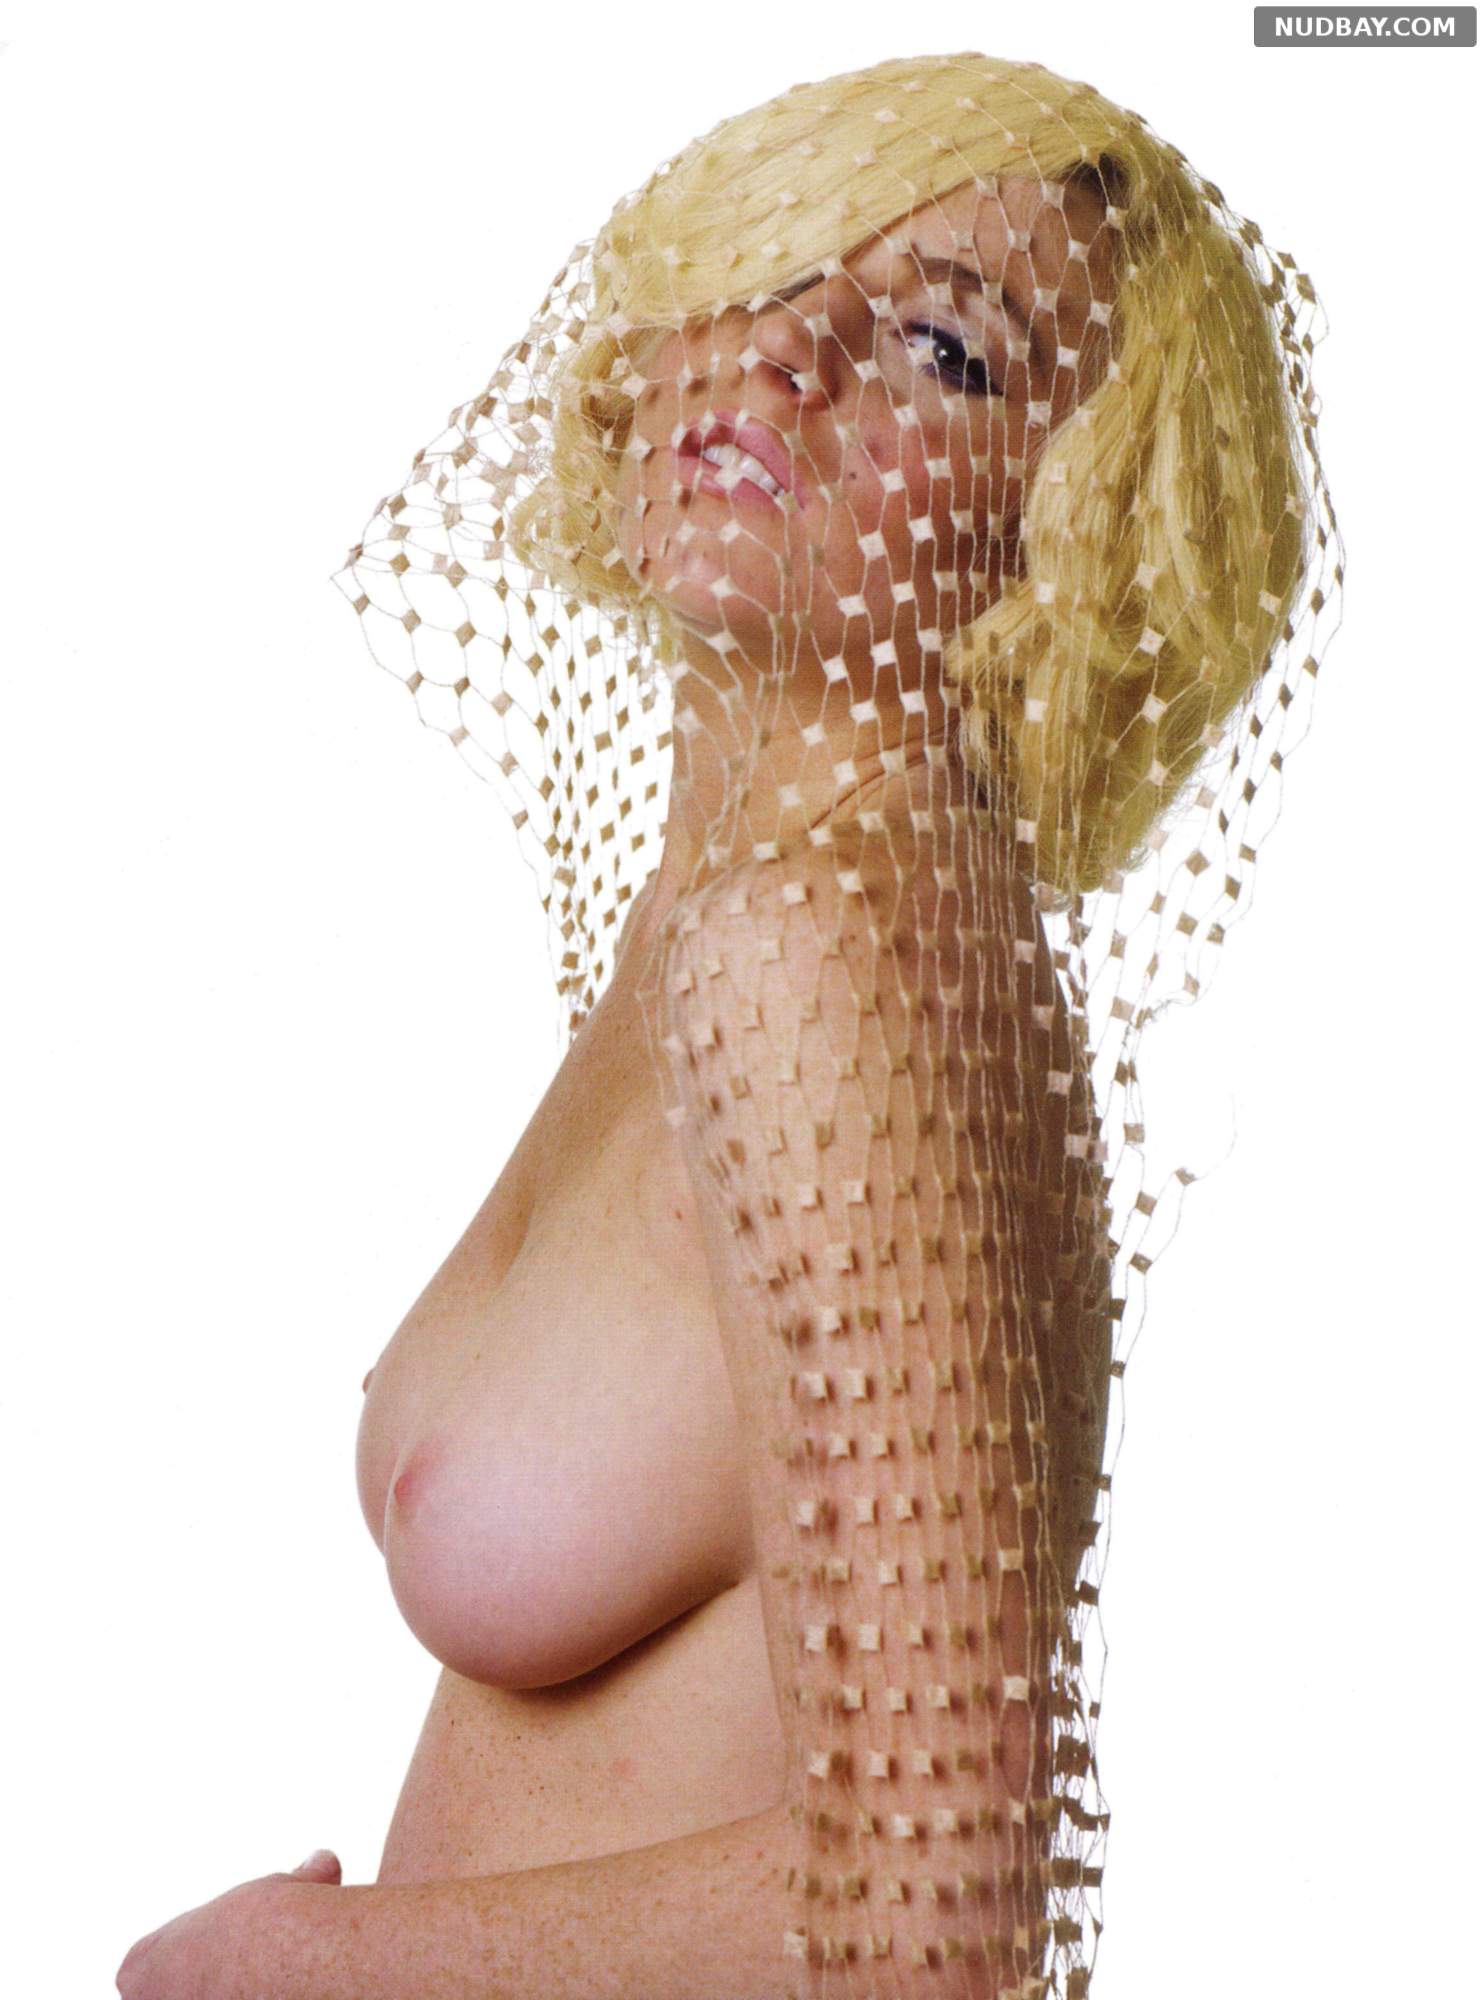 Lindsey lohan nude pic